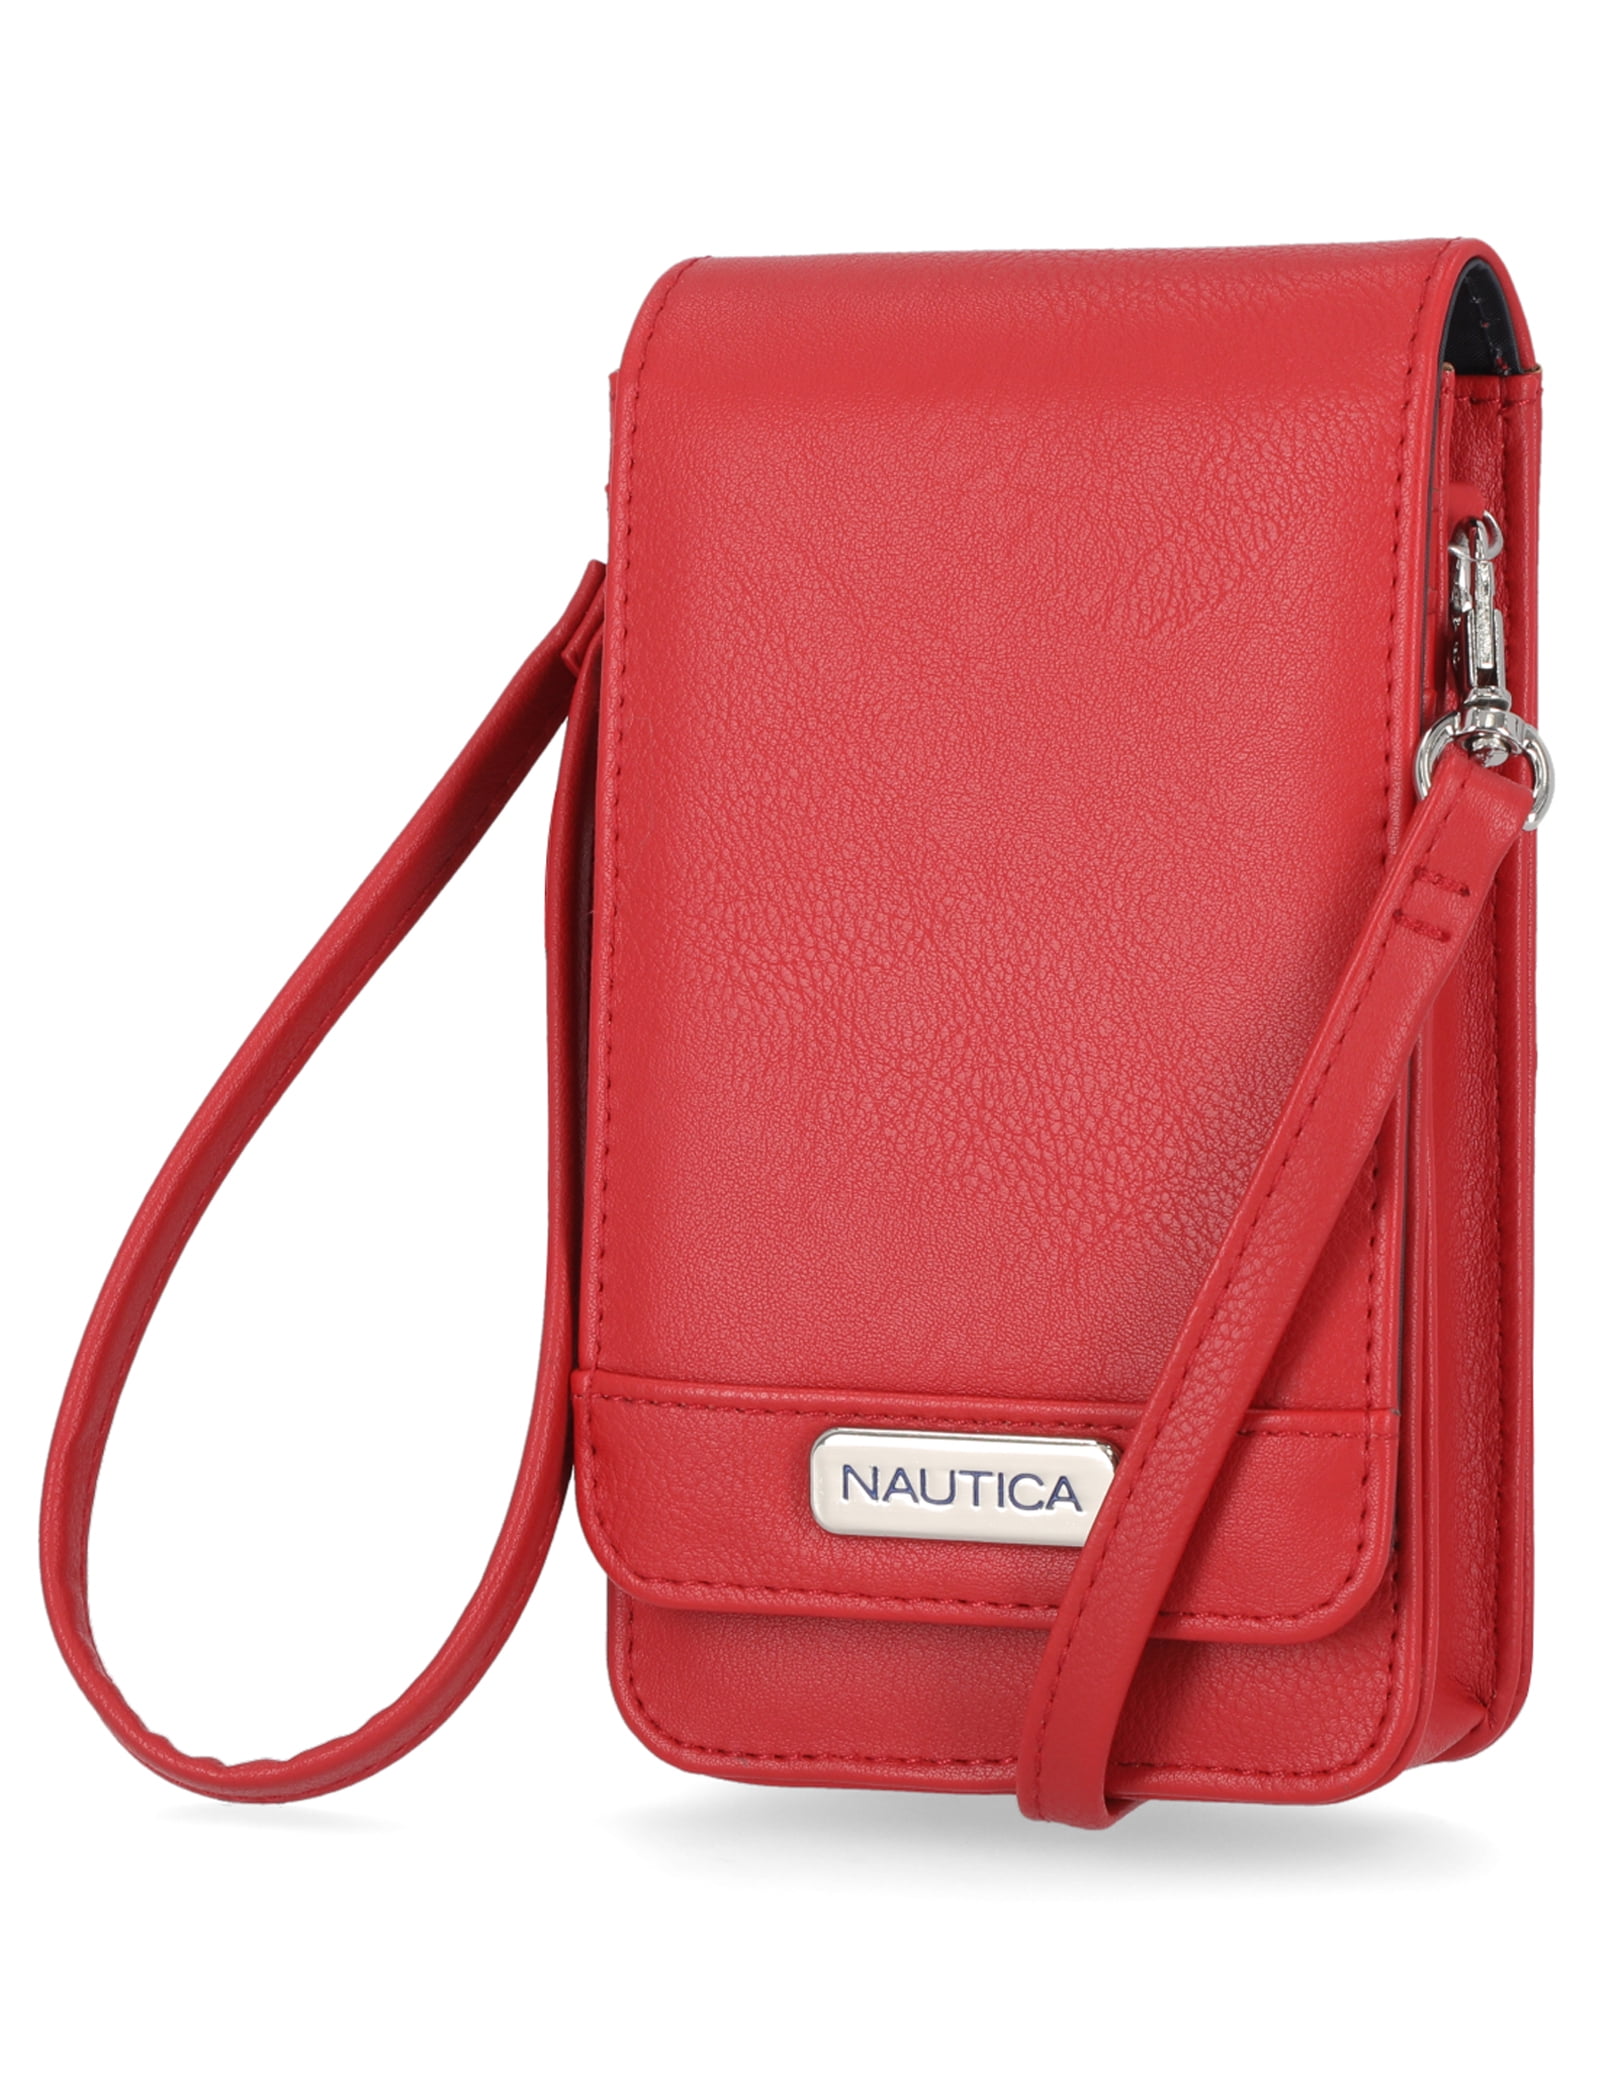 New Fashion Women Purse Wallet Long Card Holder Clutch Leather PU Wallets  Crown - Walmart.com